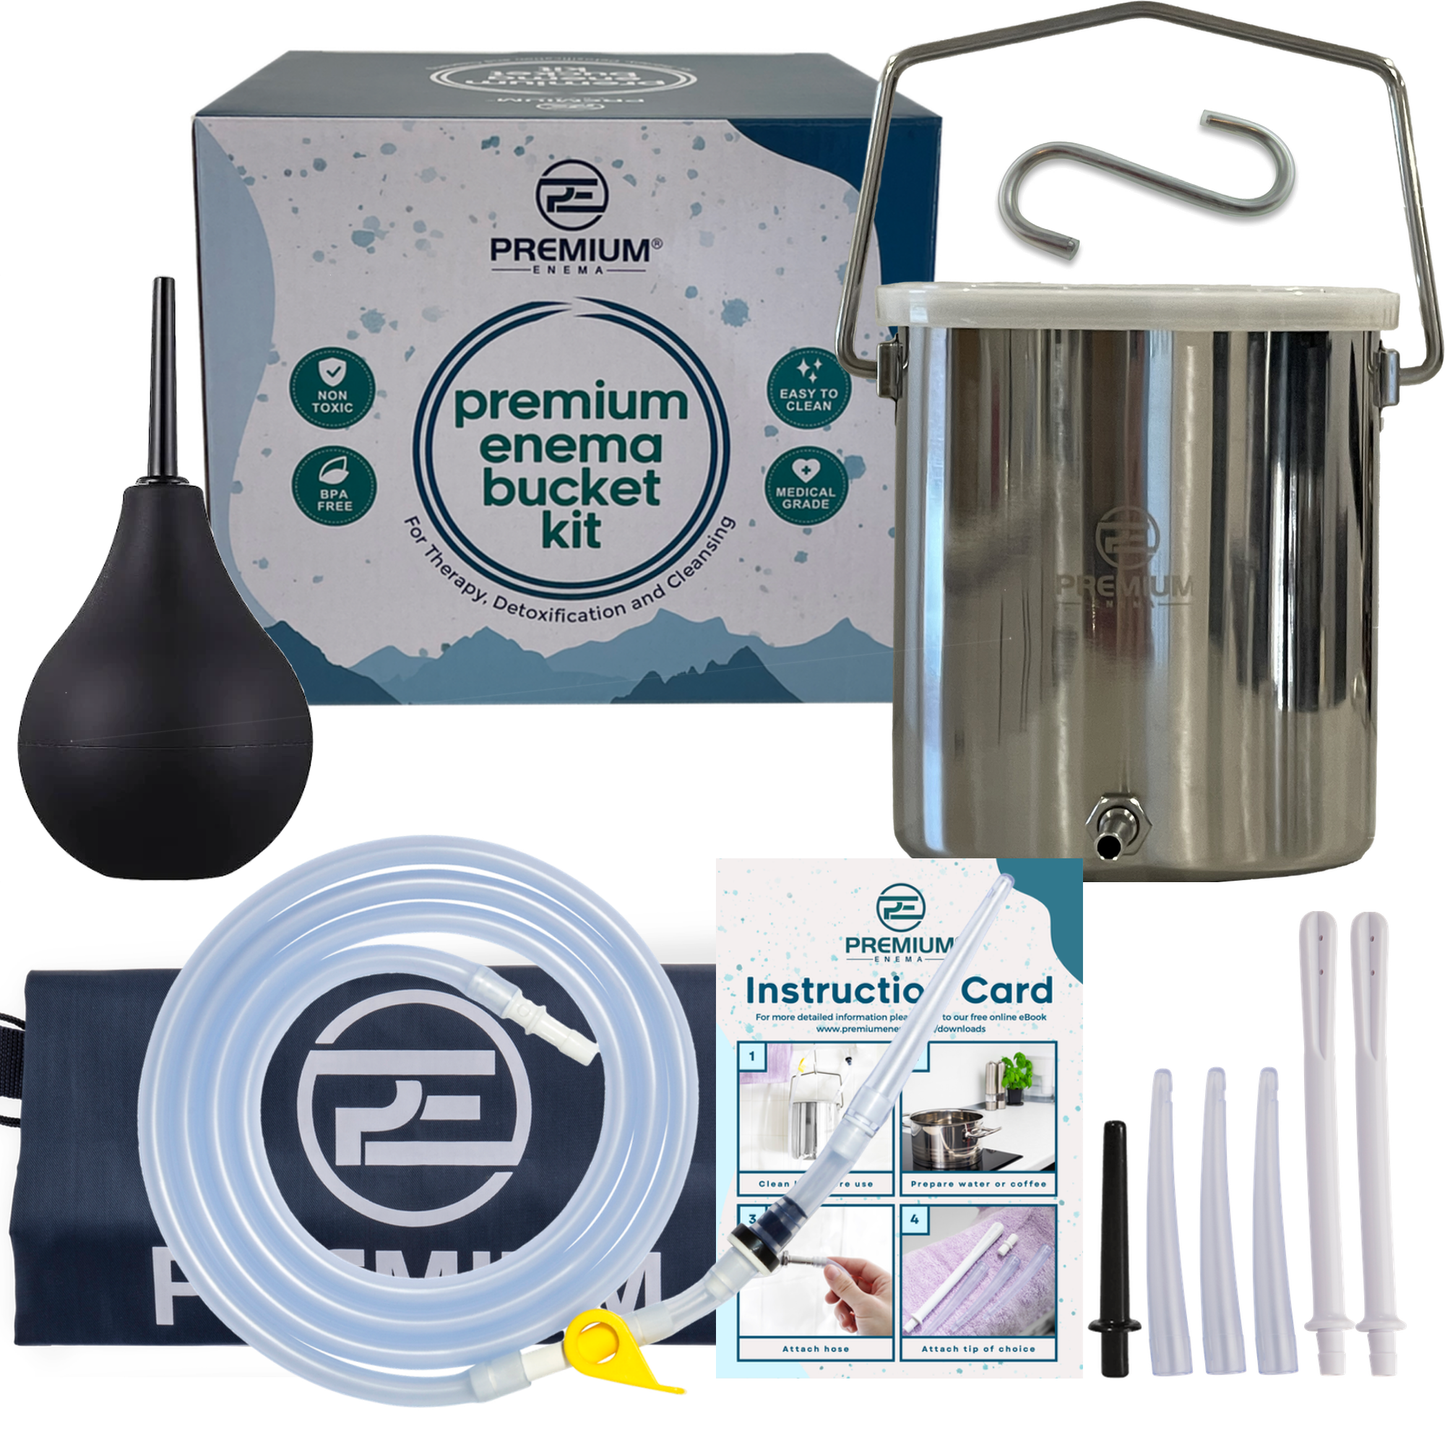 PE Premium Enema Stainless Steel Coffee Enema Bucket Kit - Organic Home Colonic Kit for Men/Women - Ideal for Colon and Liver Cleansing, Detoxifying Enemas